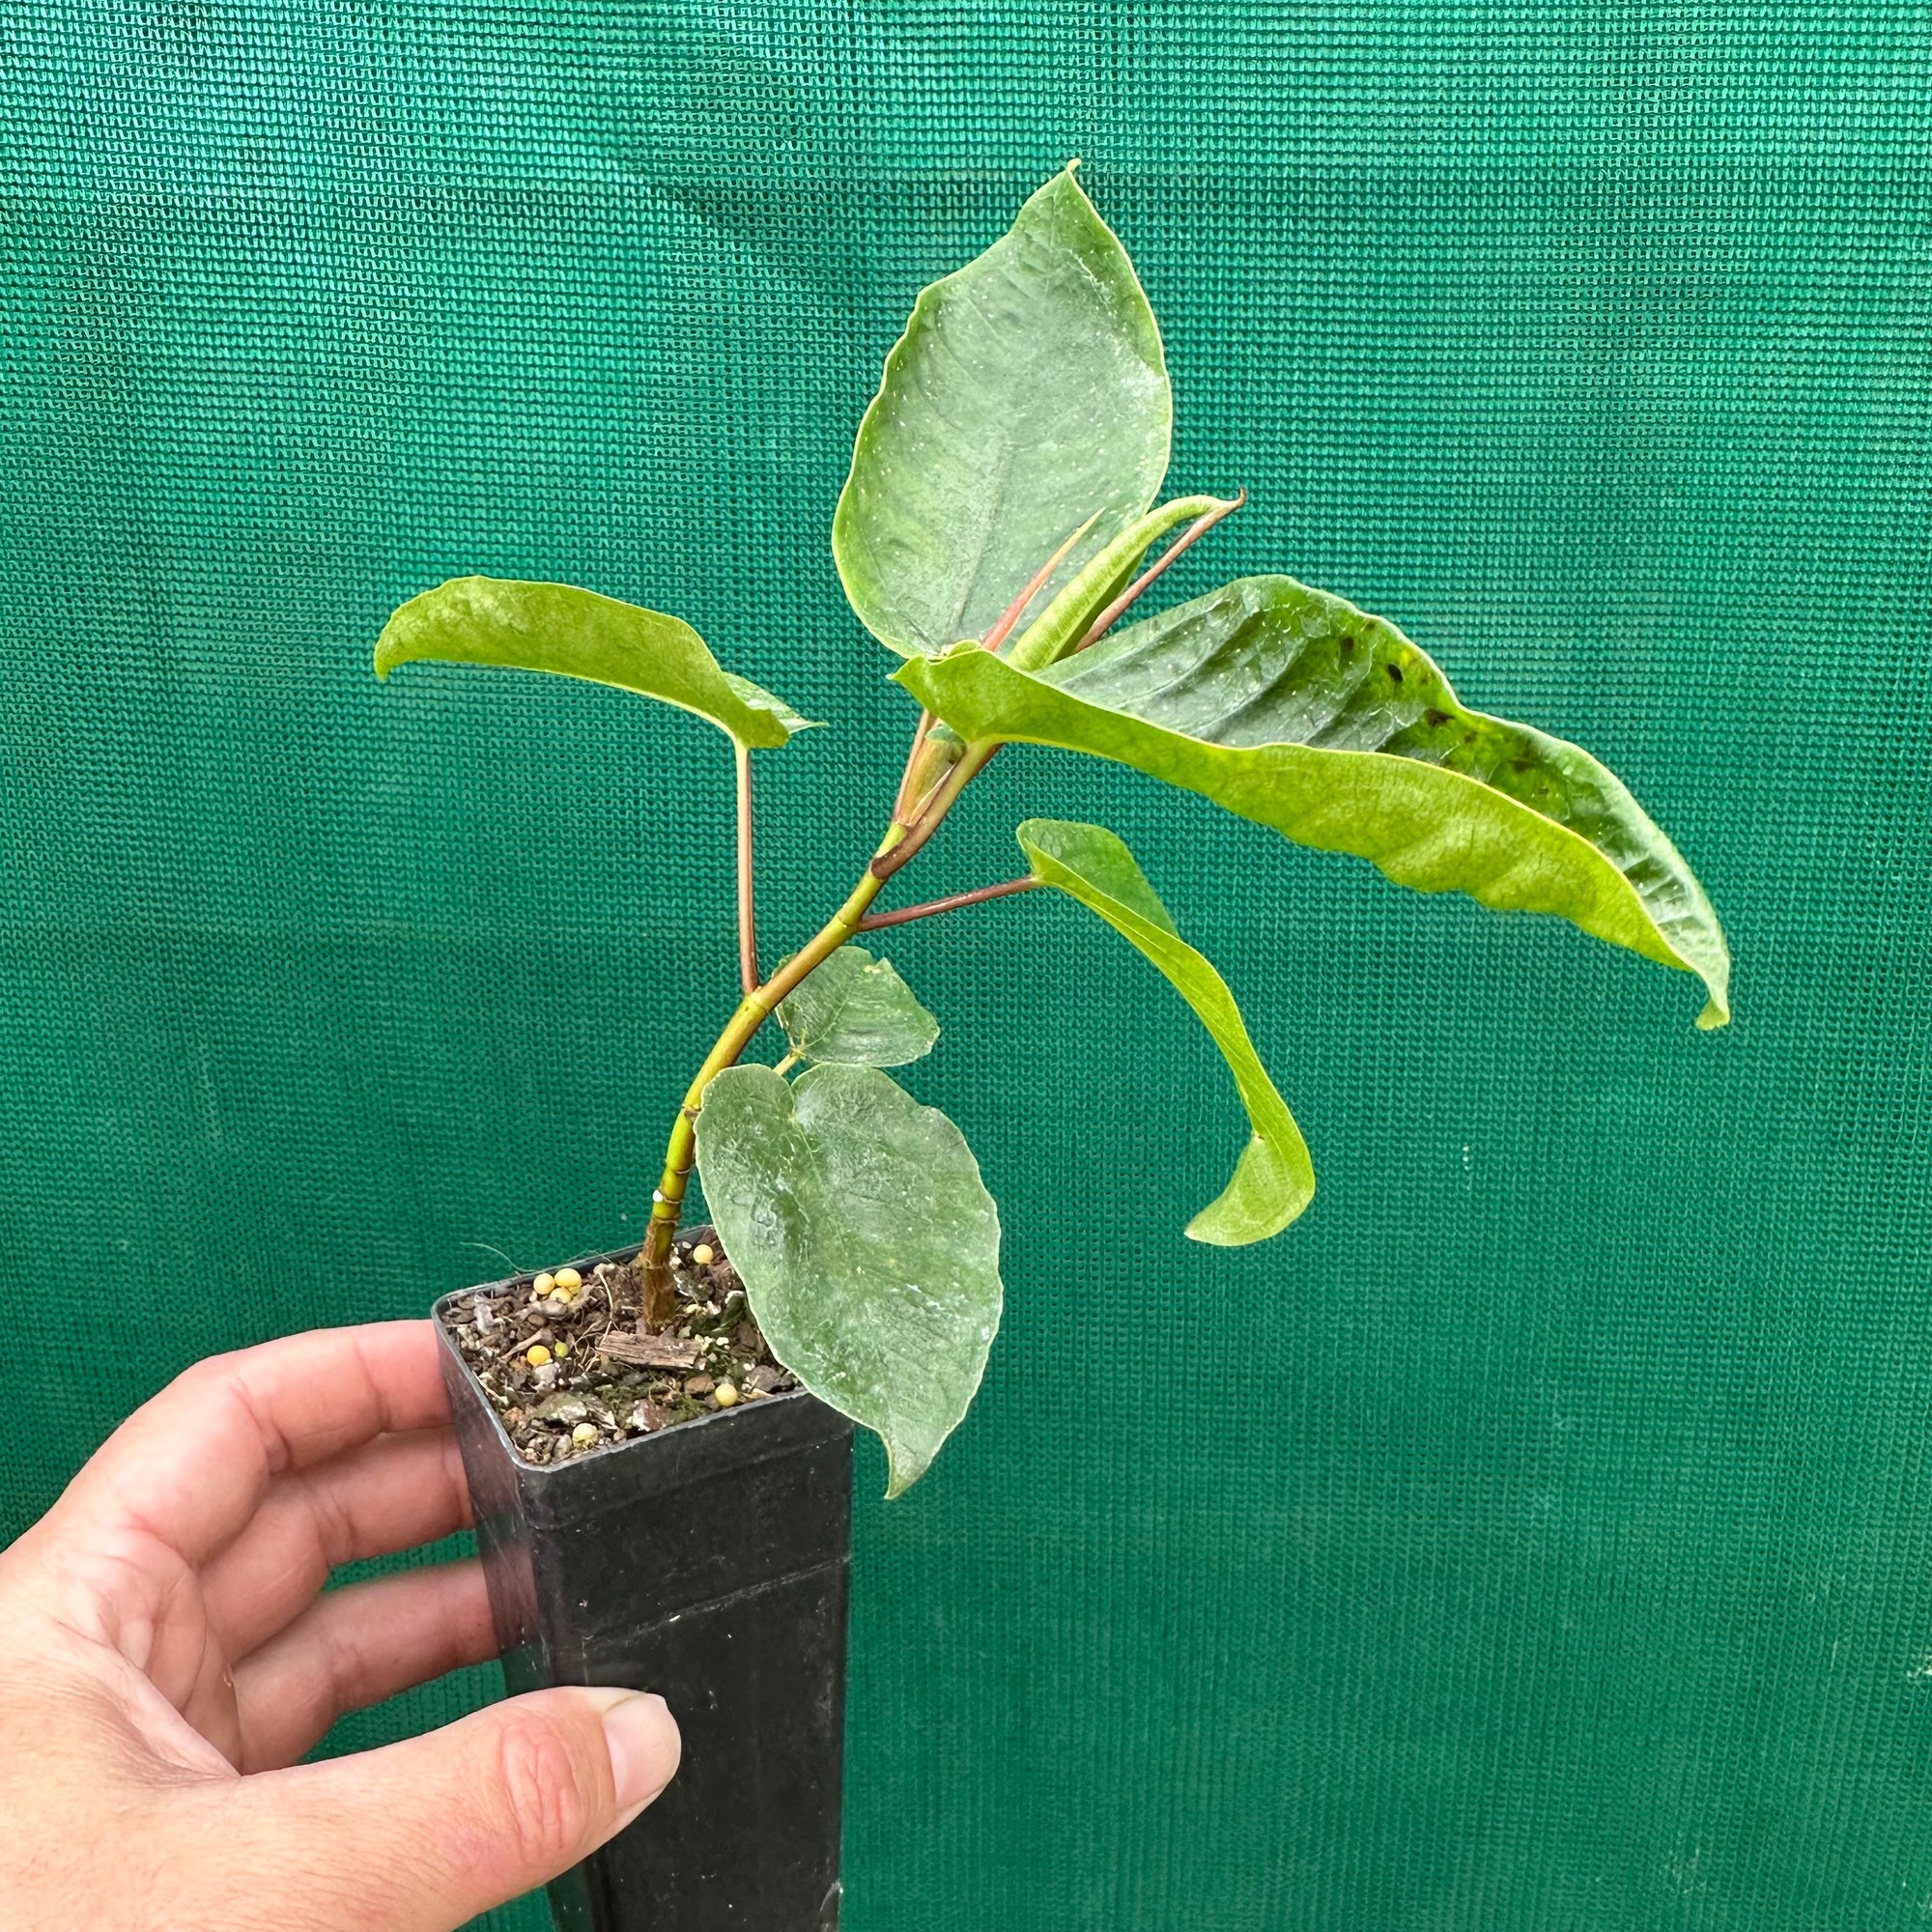 Moreton Bay Fig - Ficus macrophylla